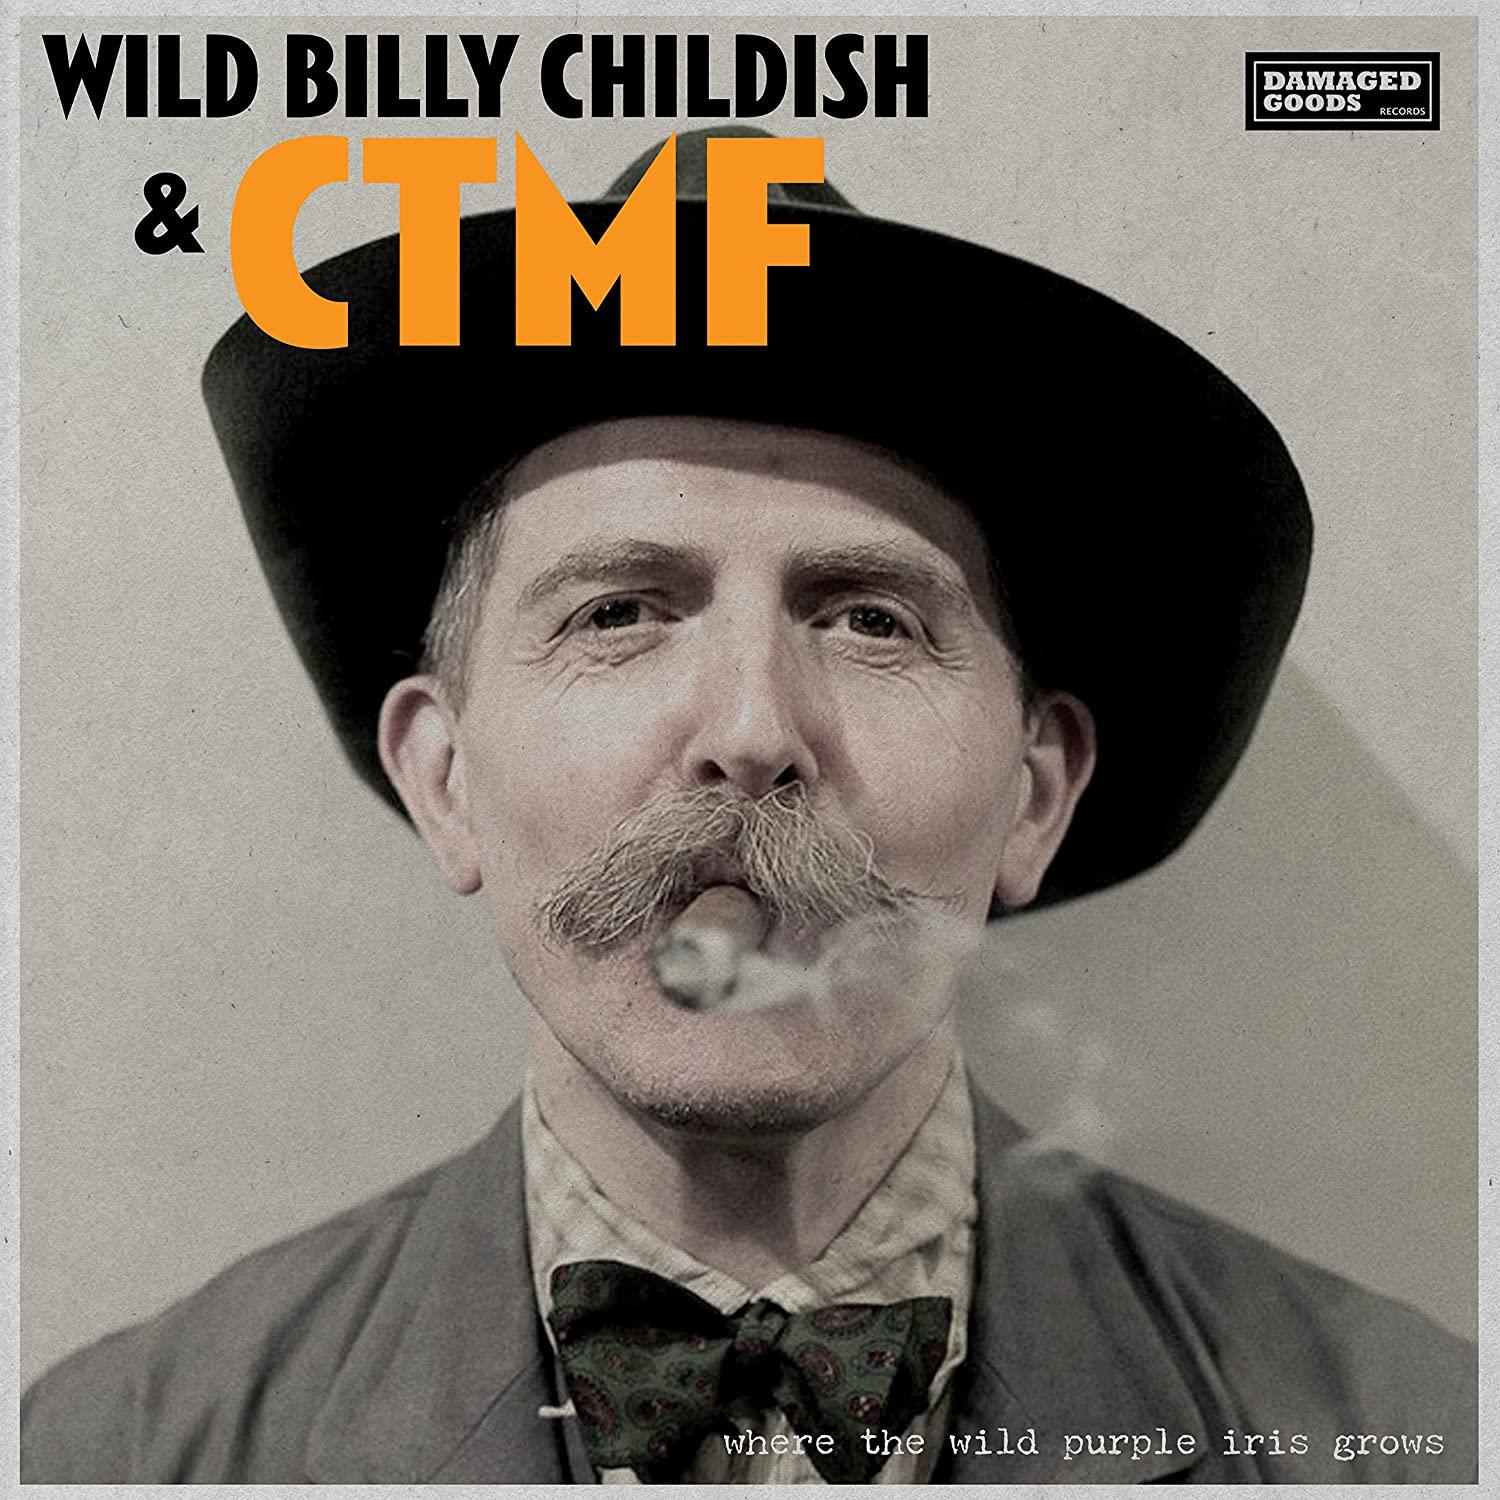 Wild Billy Childish & Wild Grows Iris - CTMF The (CD) - Where Purple